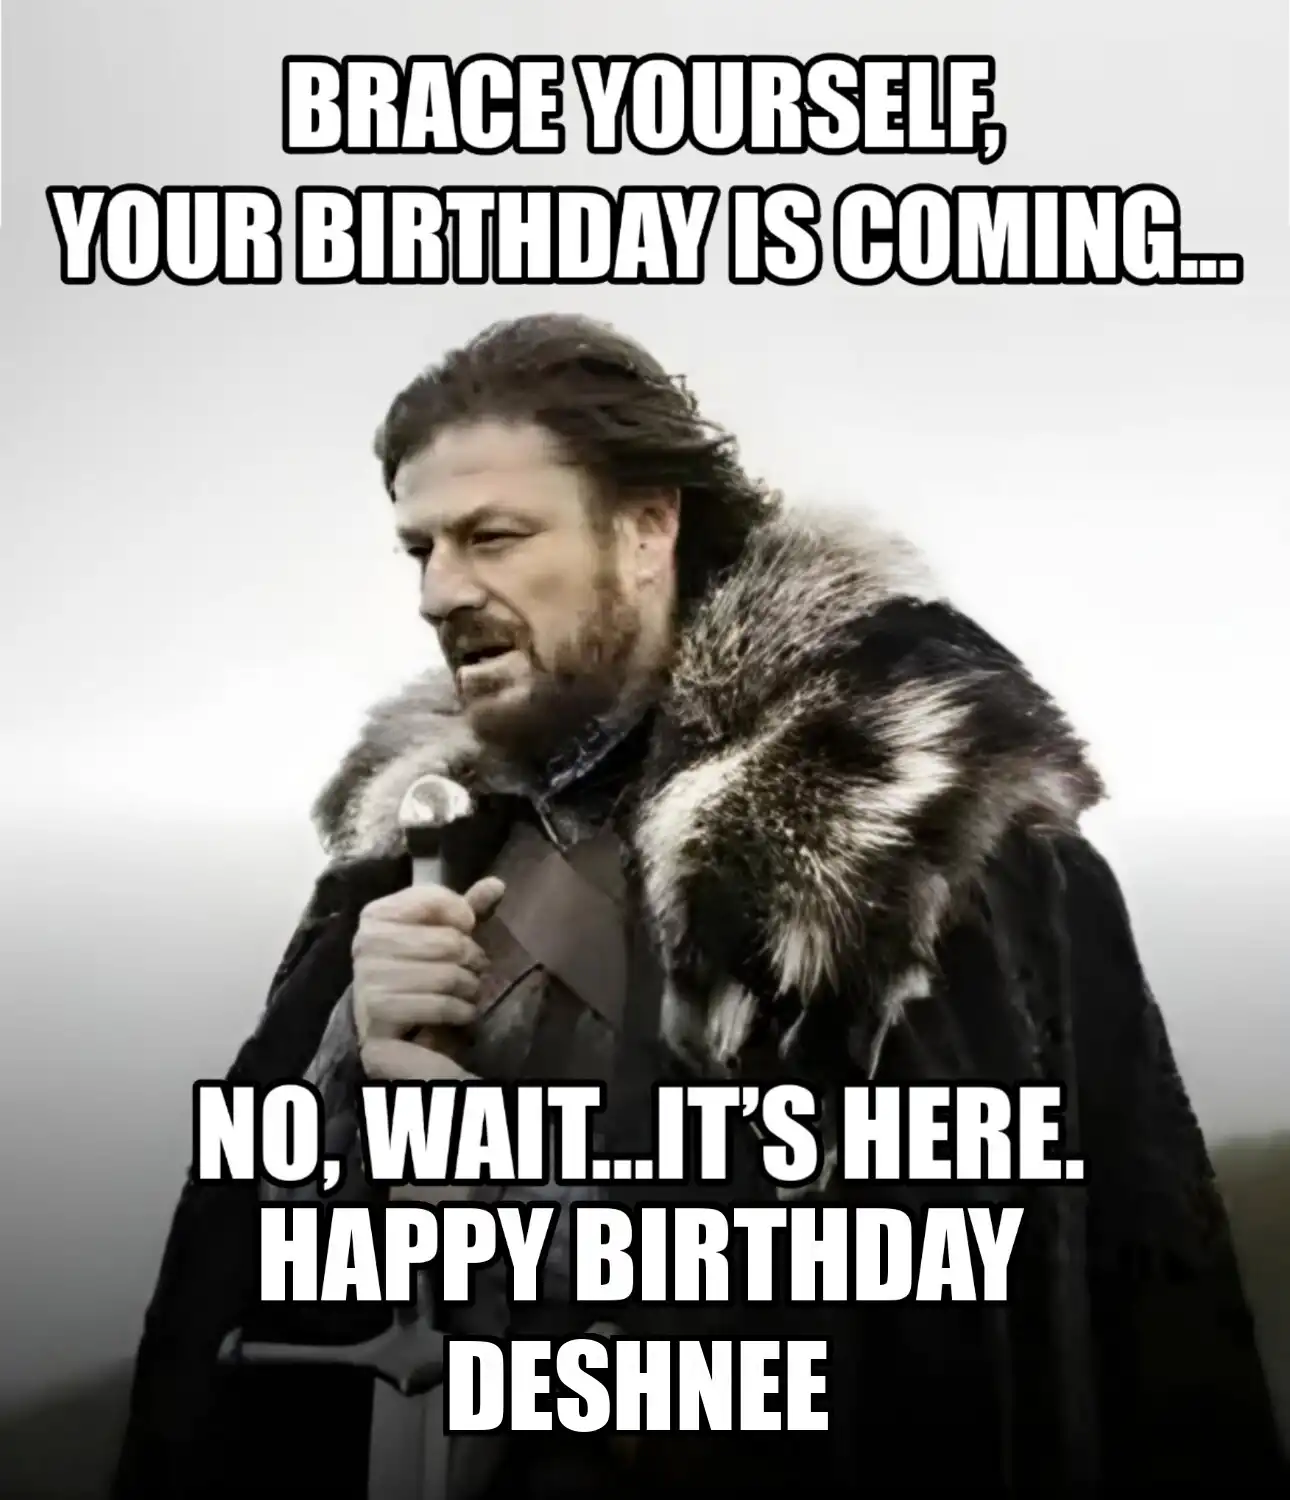 Happy Birthday Deshnee Brace Yourself Your Birthday Is Coming Meme